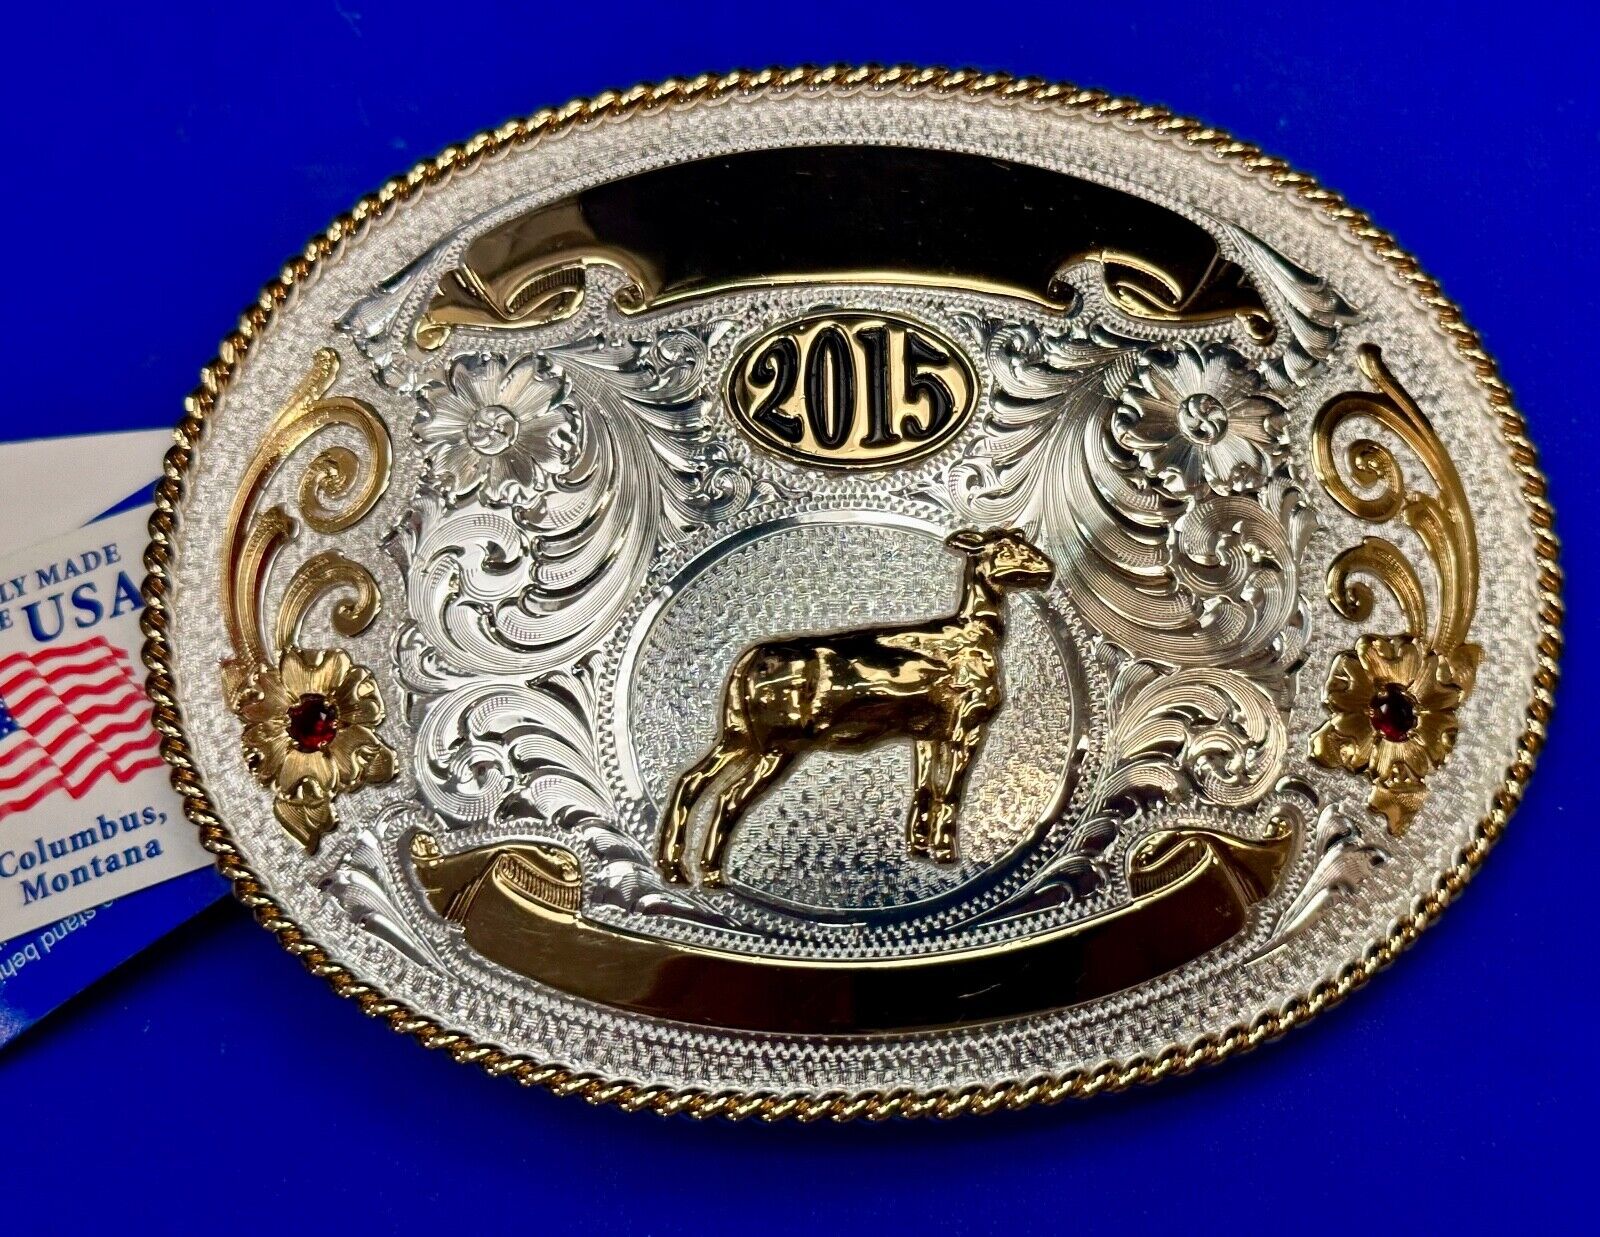 NOS 2005 Montana Silversmiths Trophy Blank Award Ribbon Scroll belt buckle